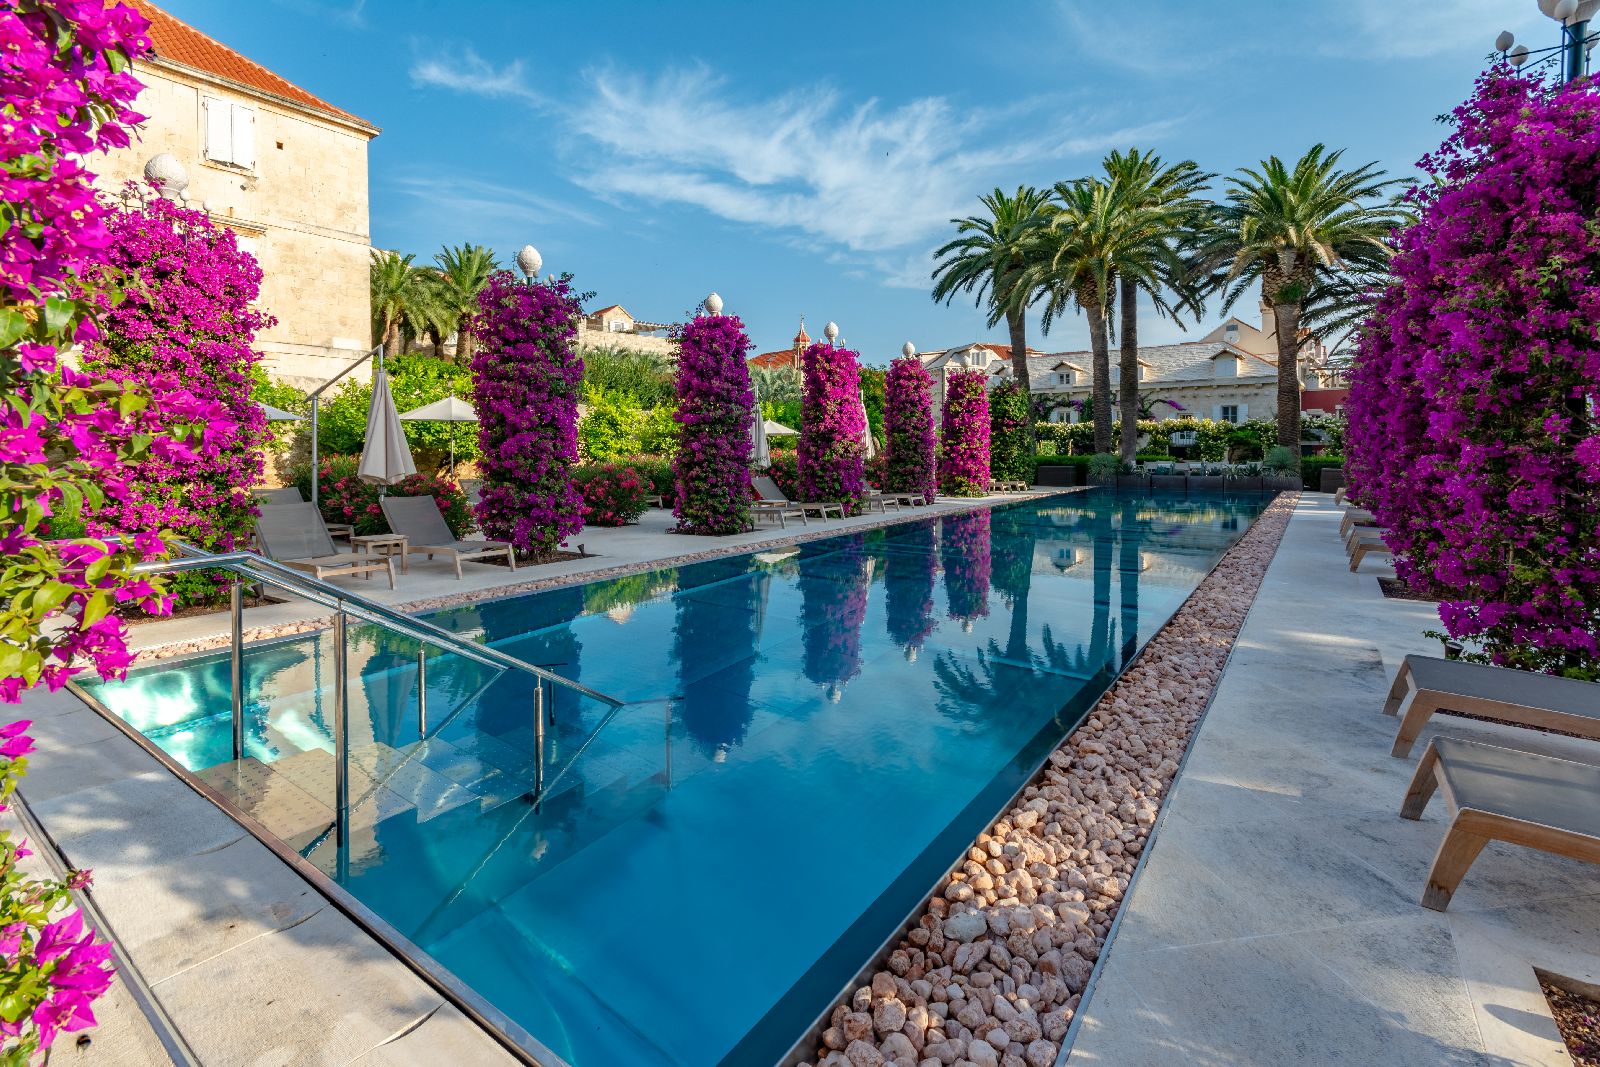 The swimming pool and terrace at Hotel Lemongarden on Brac island Croatia